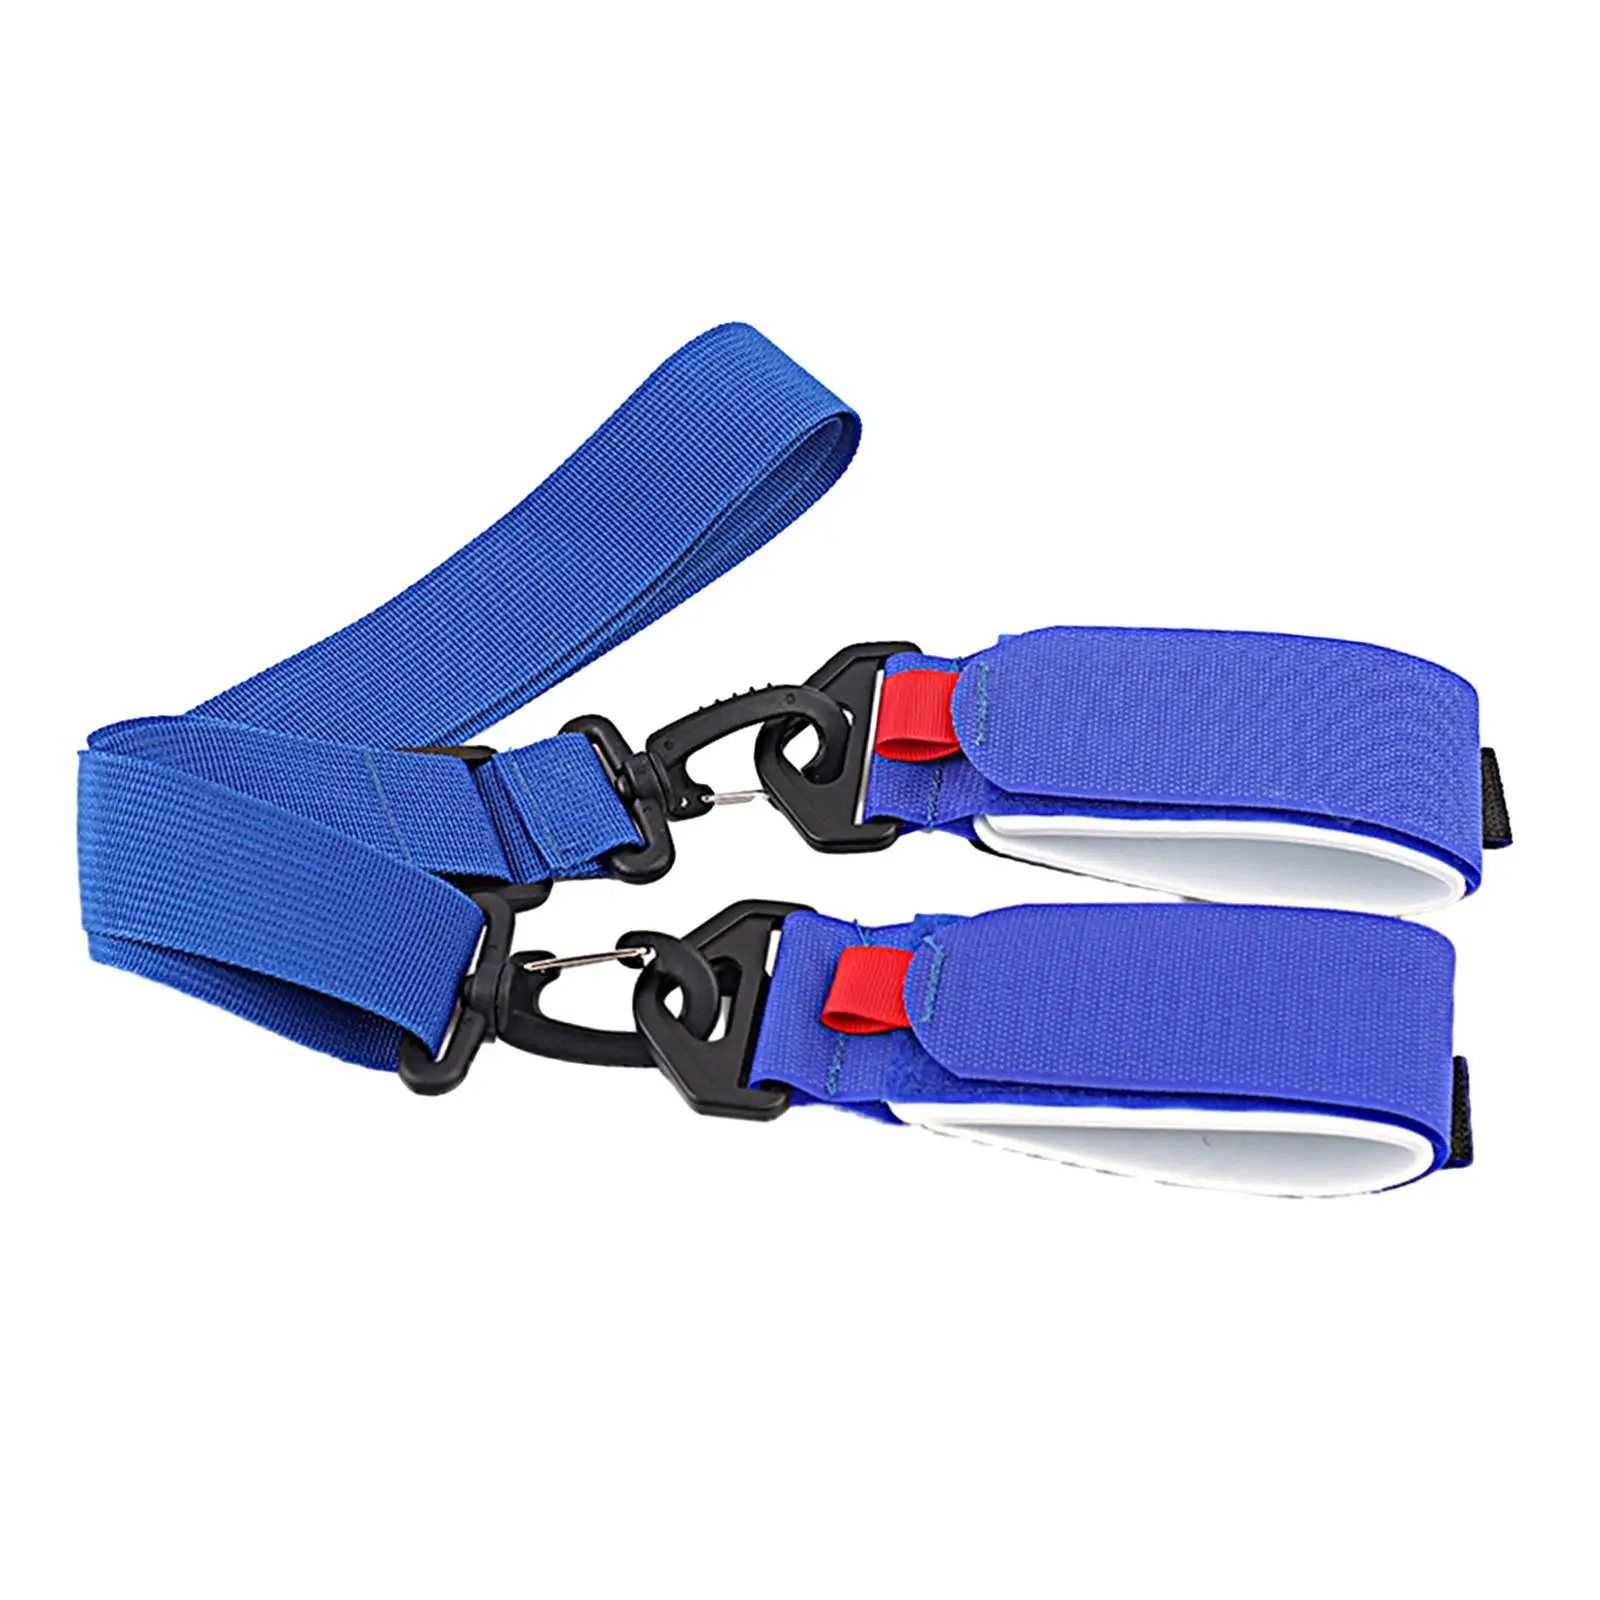 Ski Pole Carrier Strap Wear Resistant Lightweight Loop Protecting Ski Strap for Skateboarding Skiing Ski Board Outdoor Winter